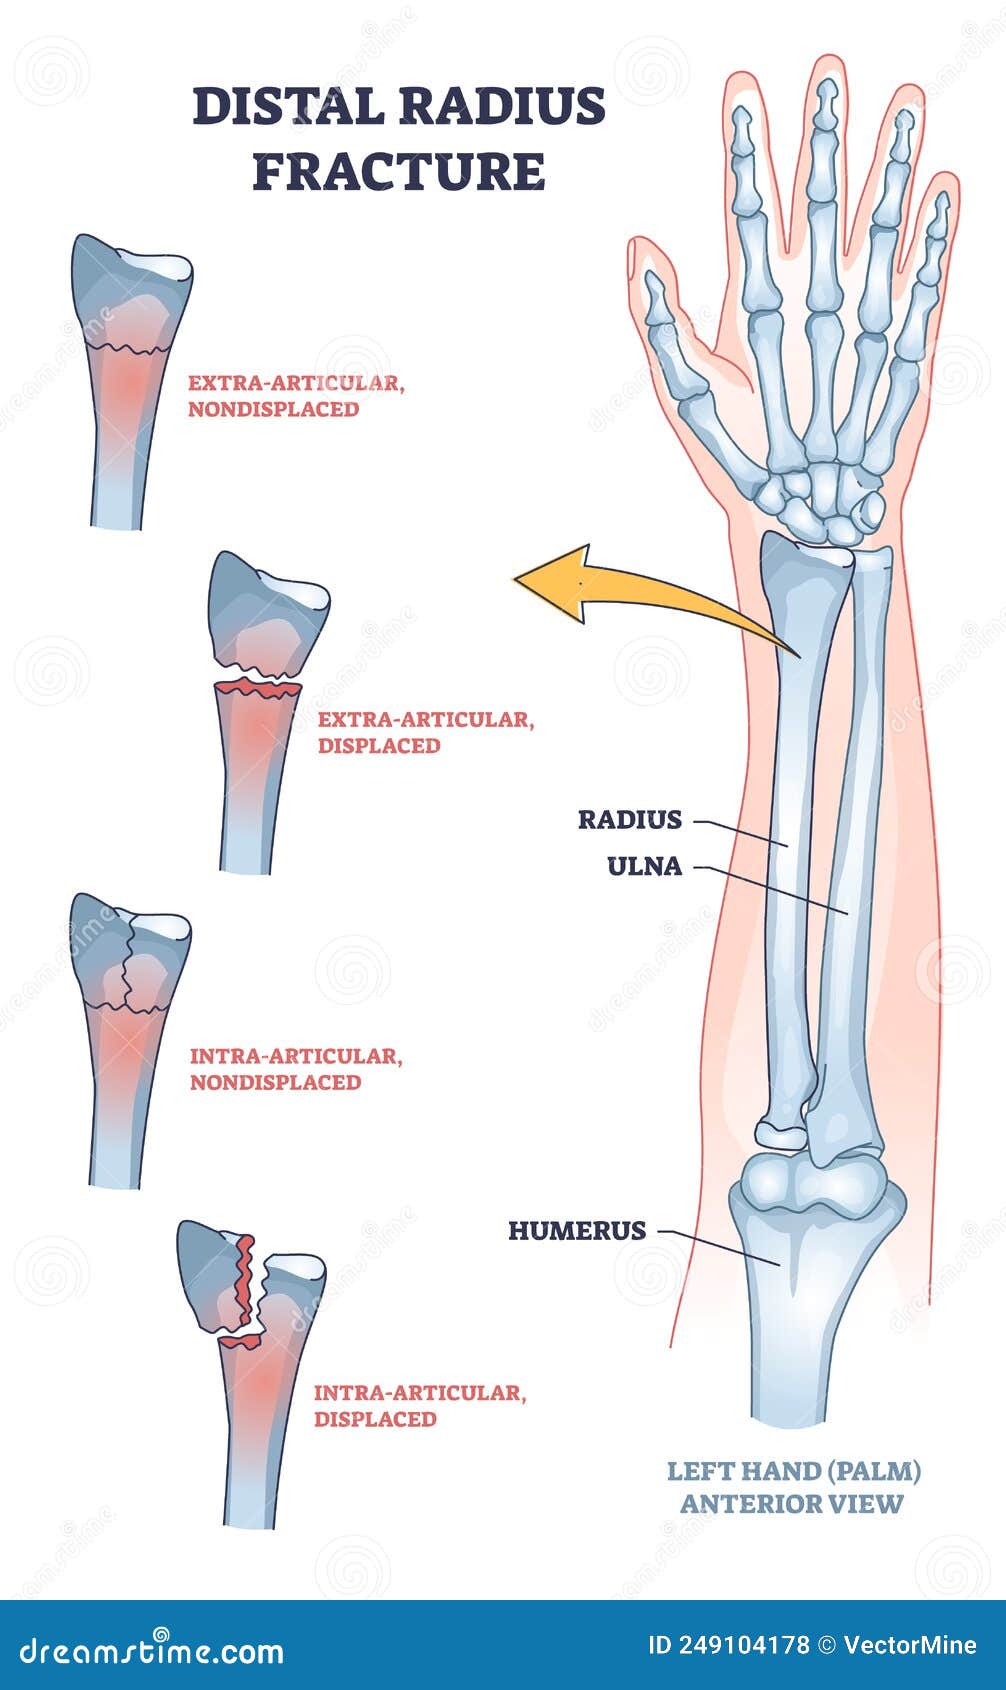 distal radius fracture and broken arm bone types anatomy outline diagram